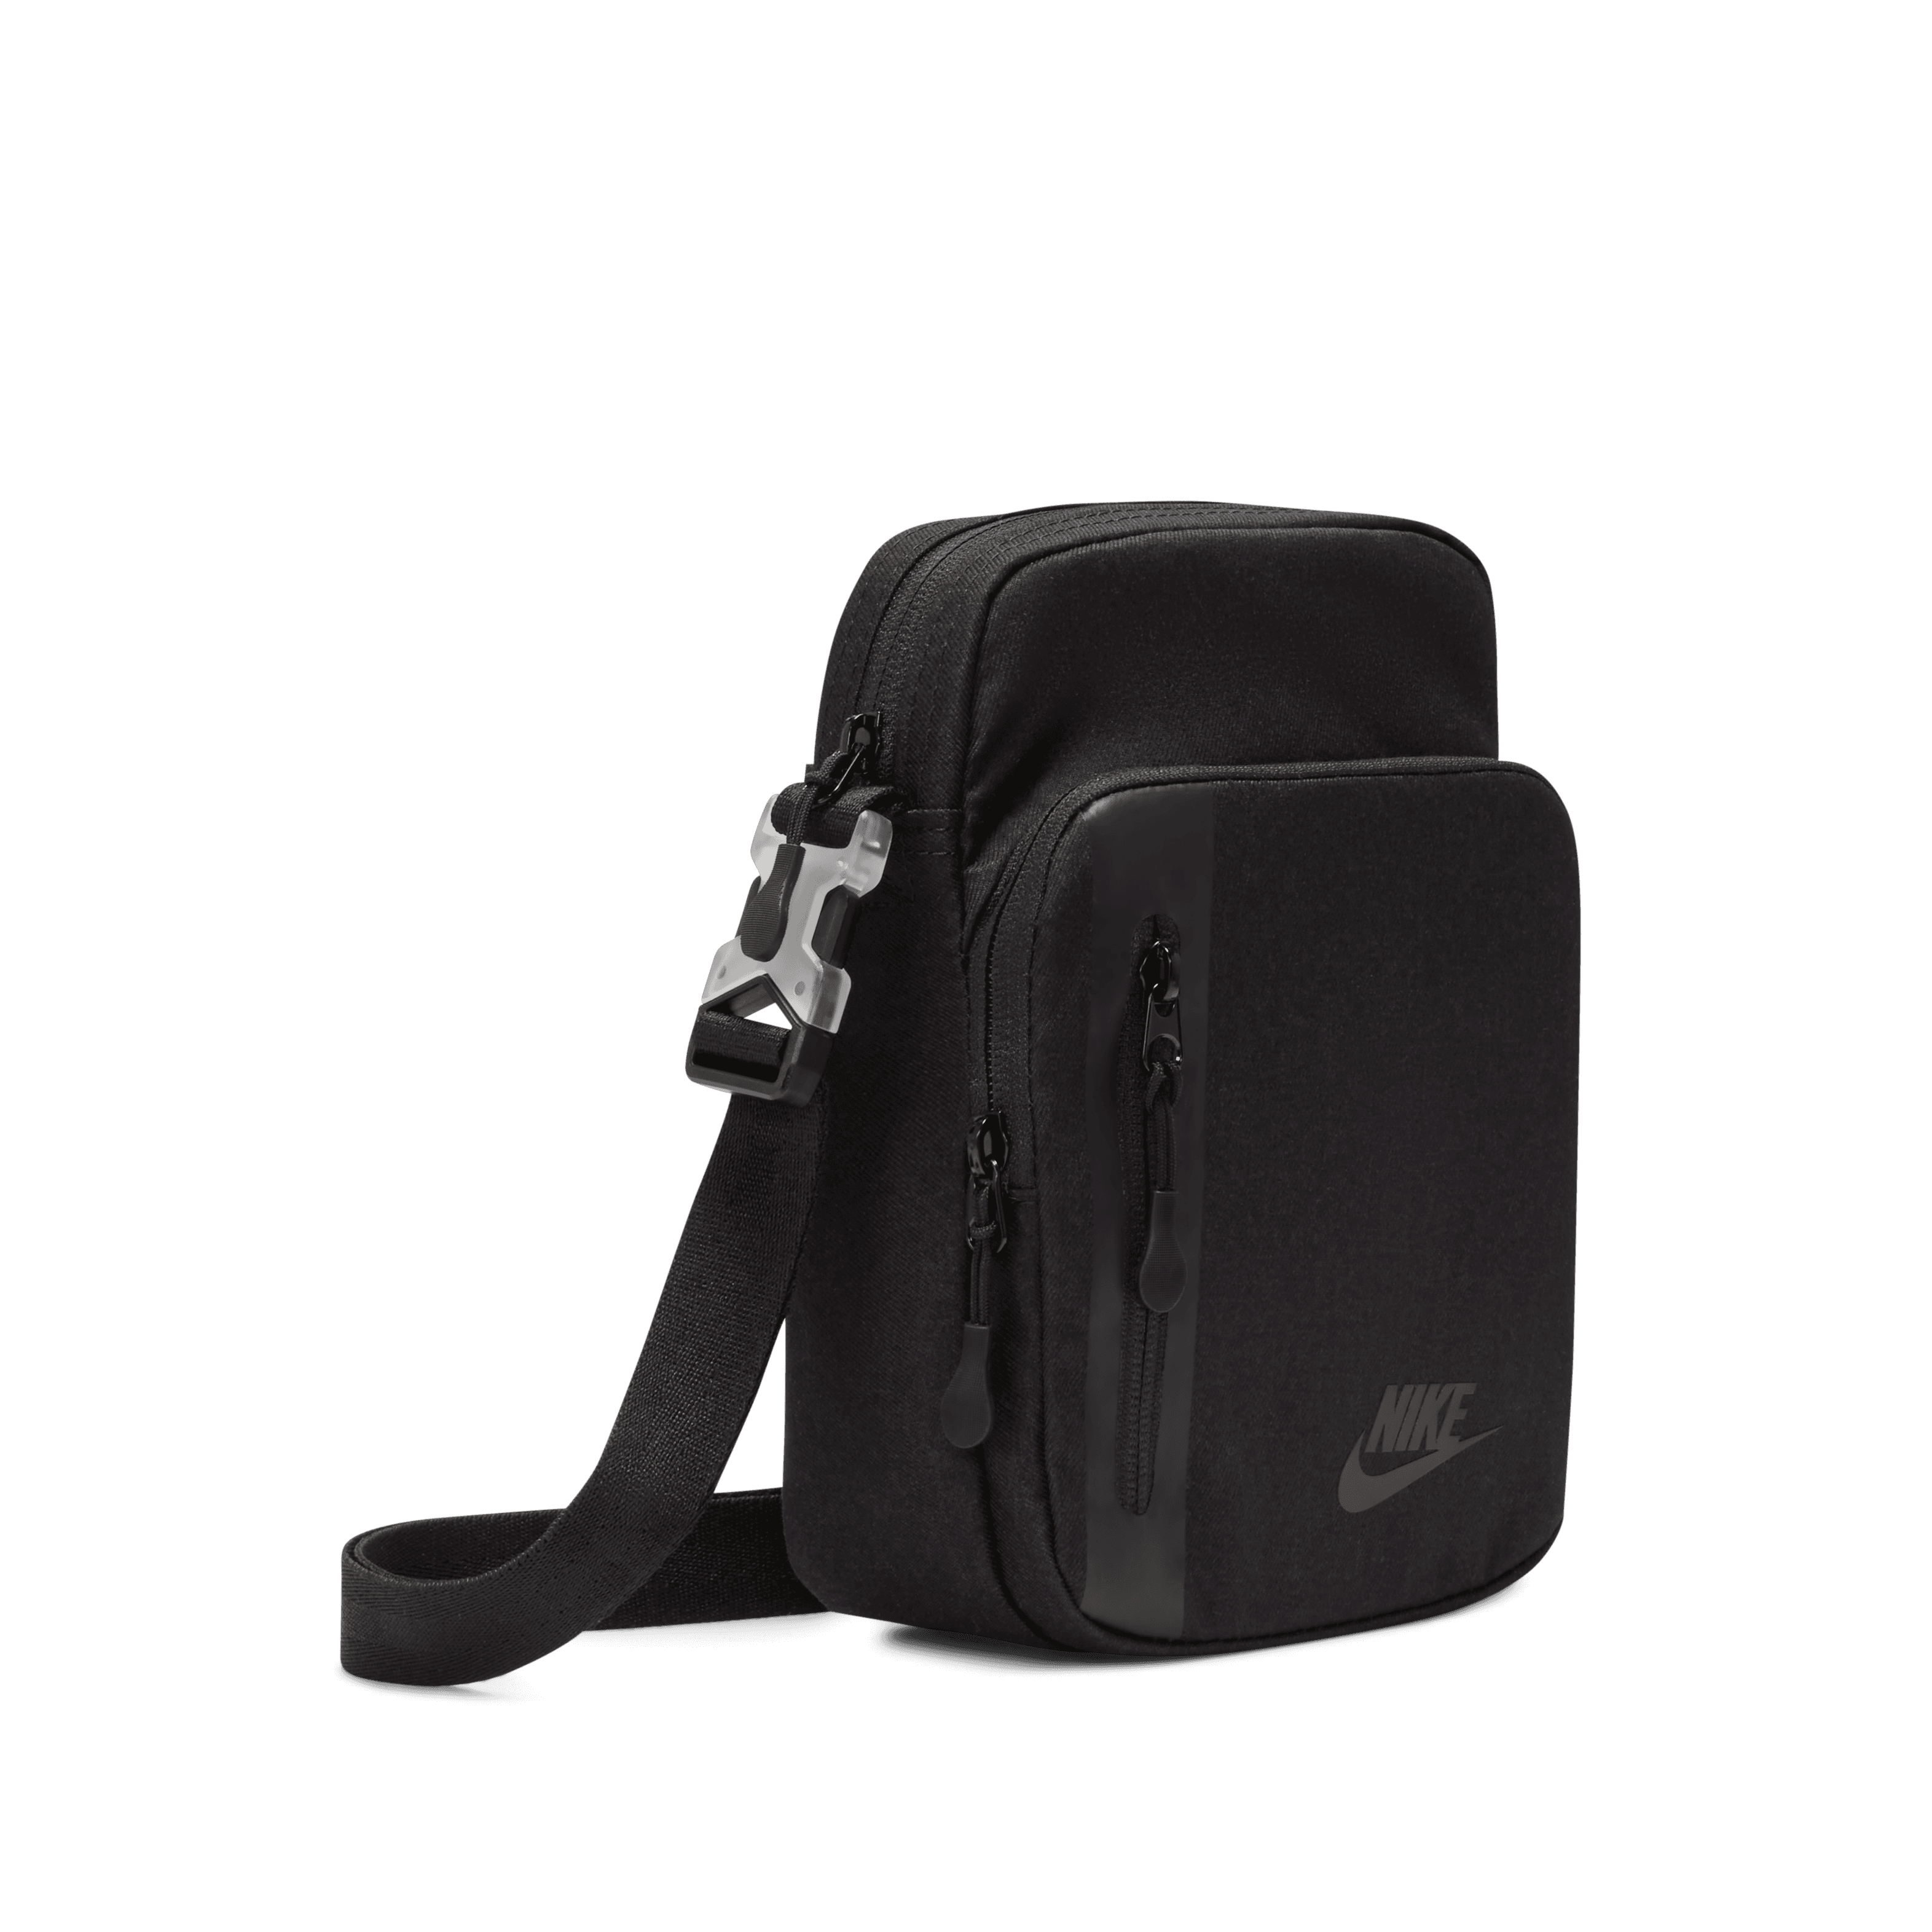 Nike Sportswear Women's Futura 365 Cross-body Bag (3L): Handbags: Amazon.com